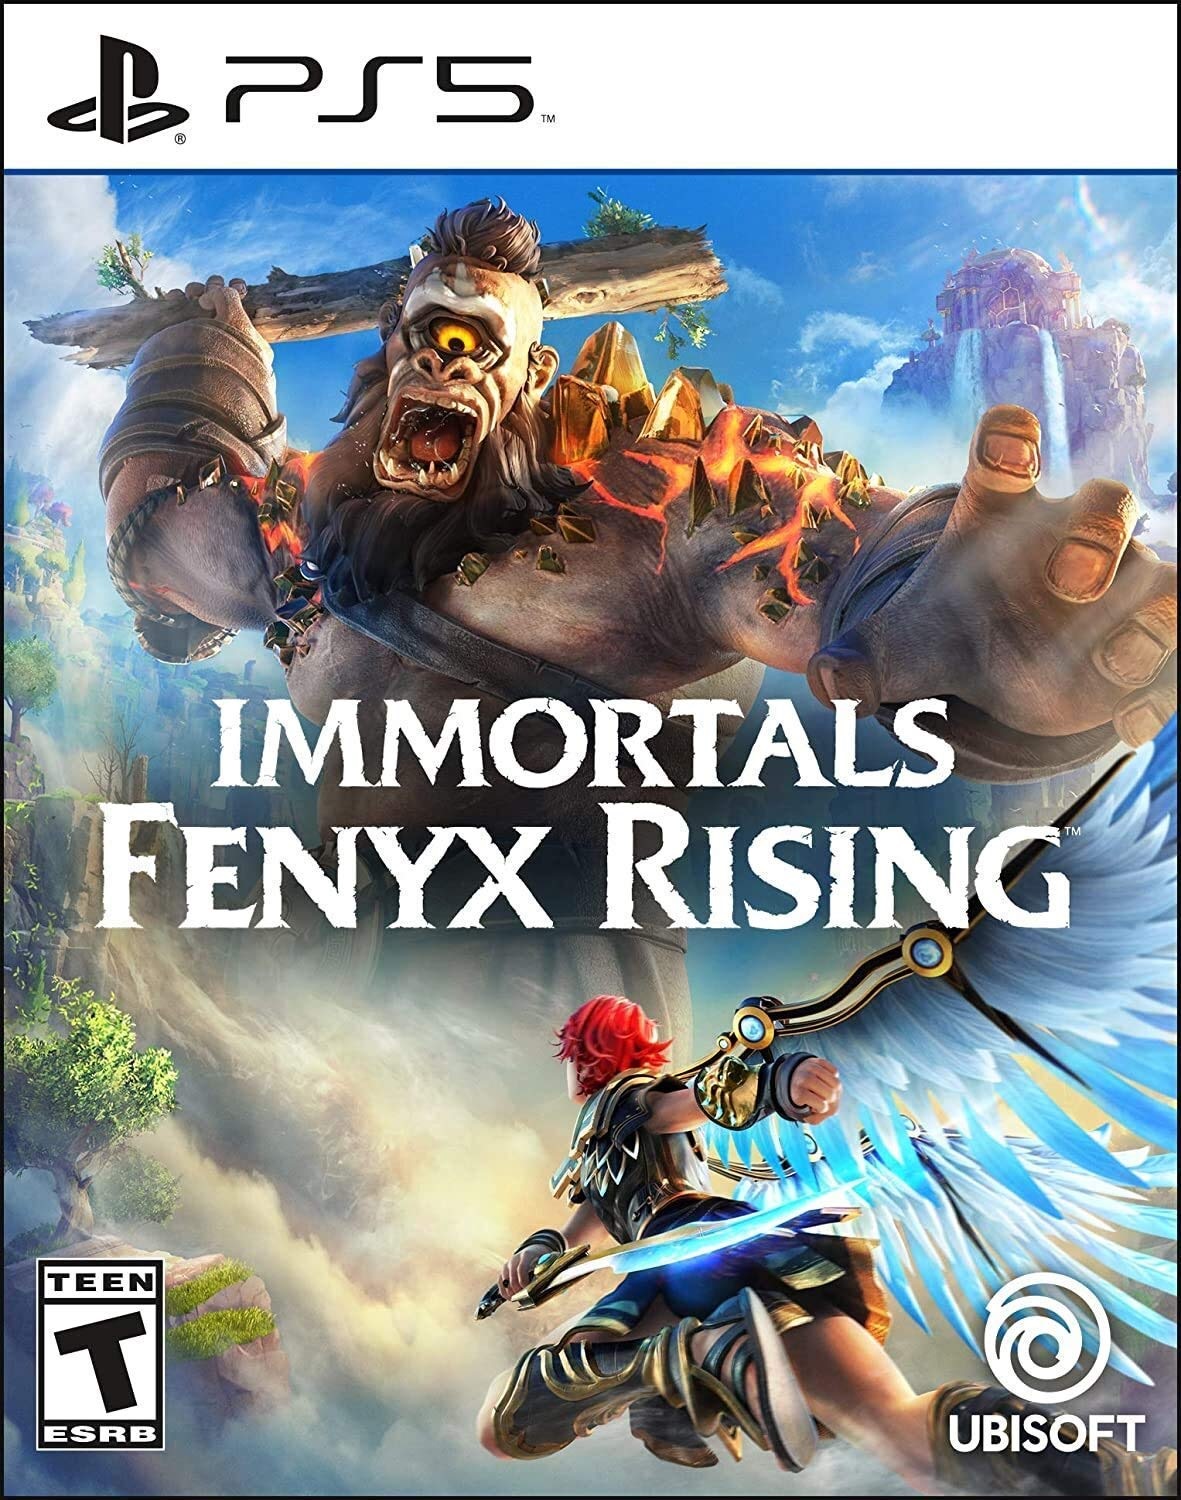 Immortals: Fenyx Rising (PlayStation 5) - Like New - $11.90 + FS @ eBay